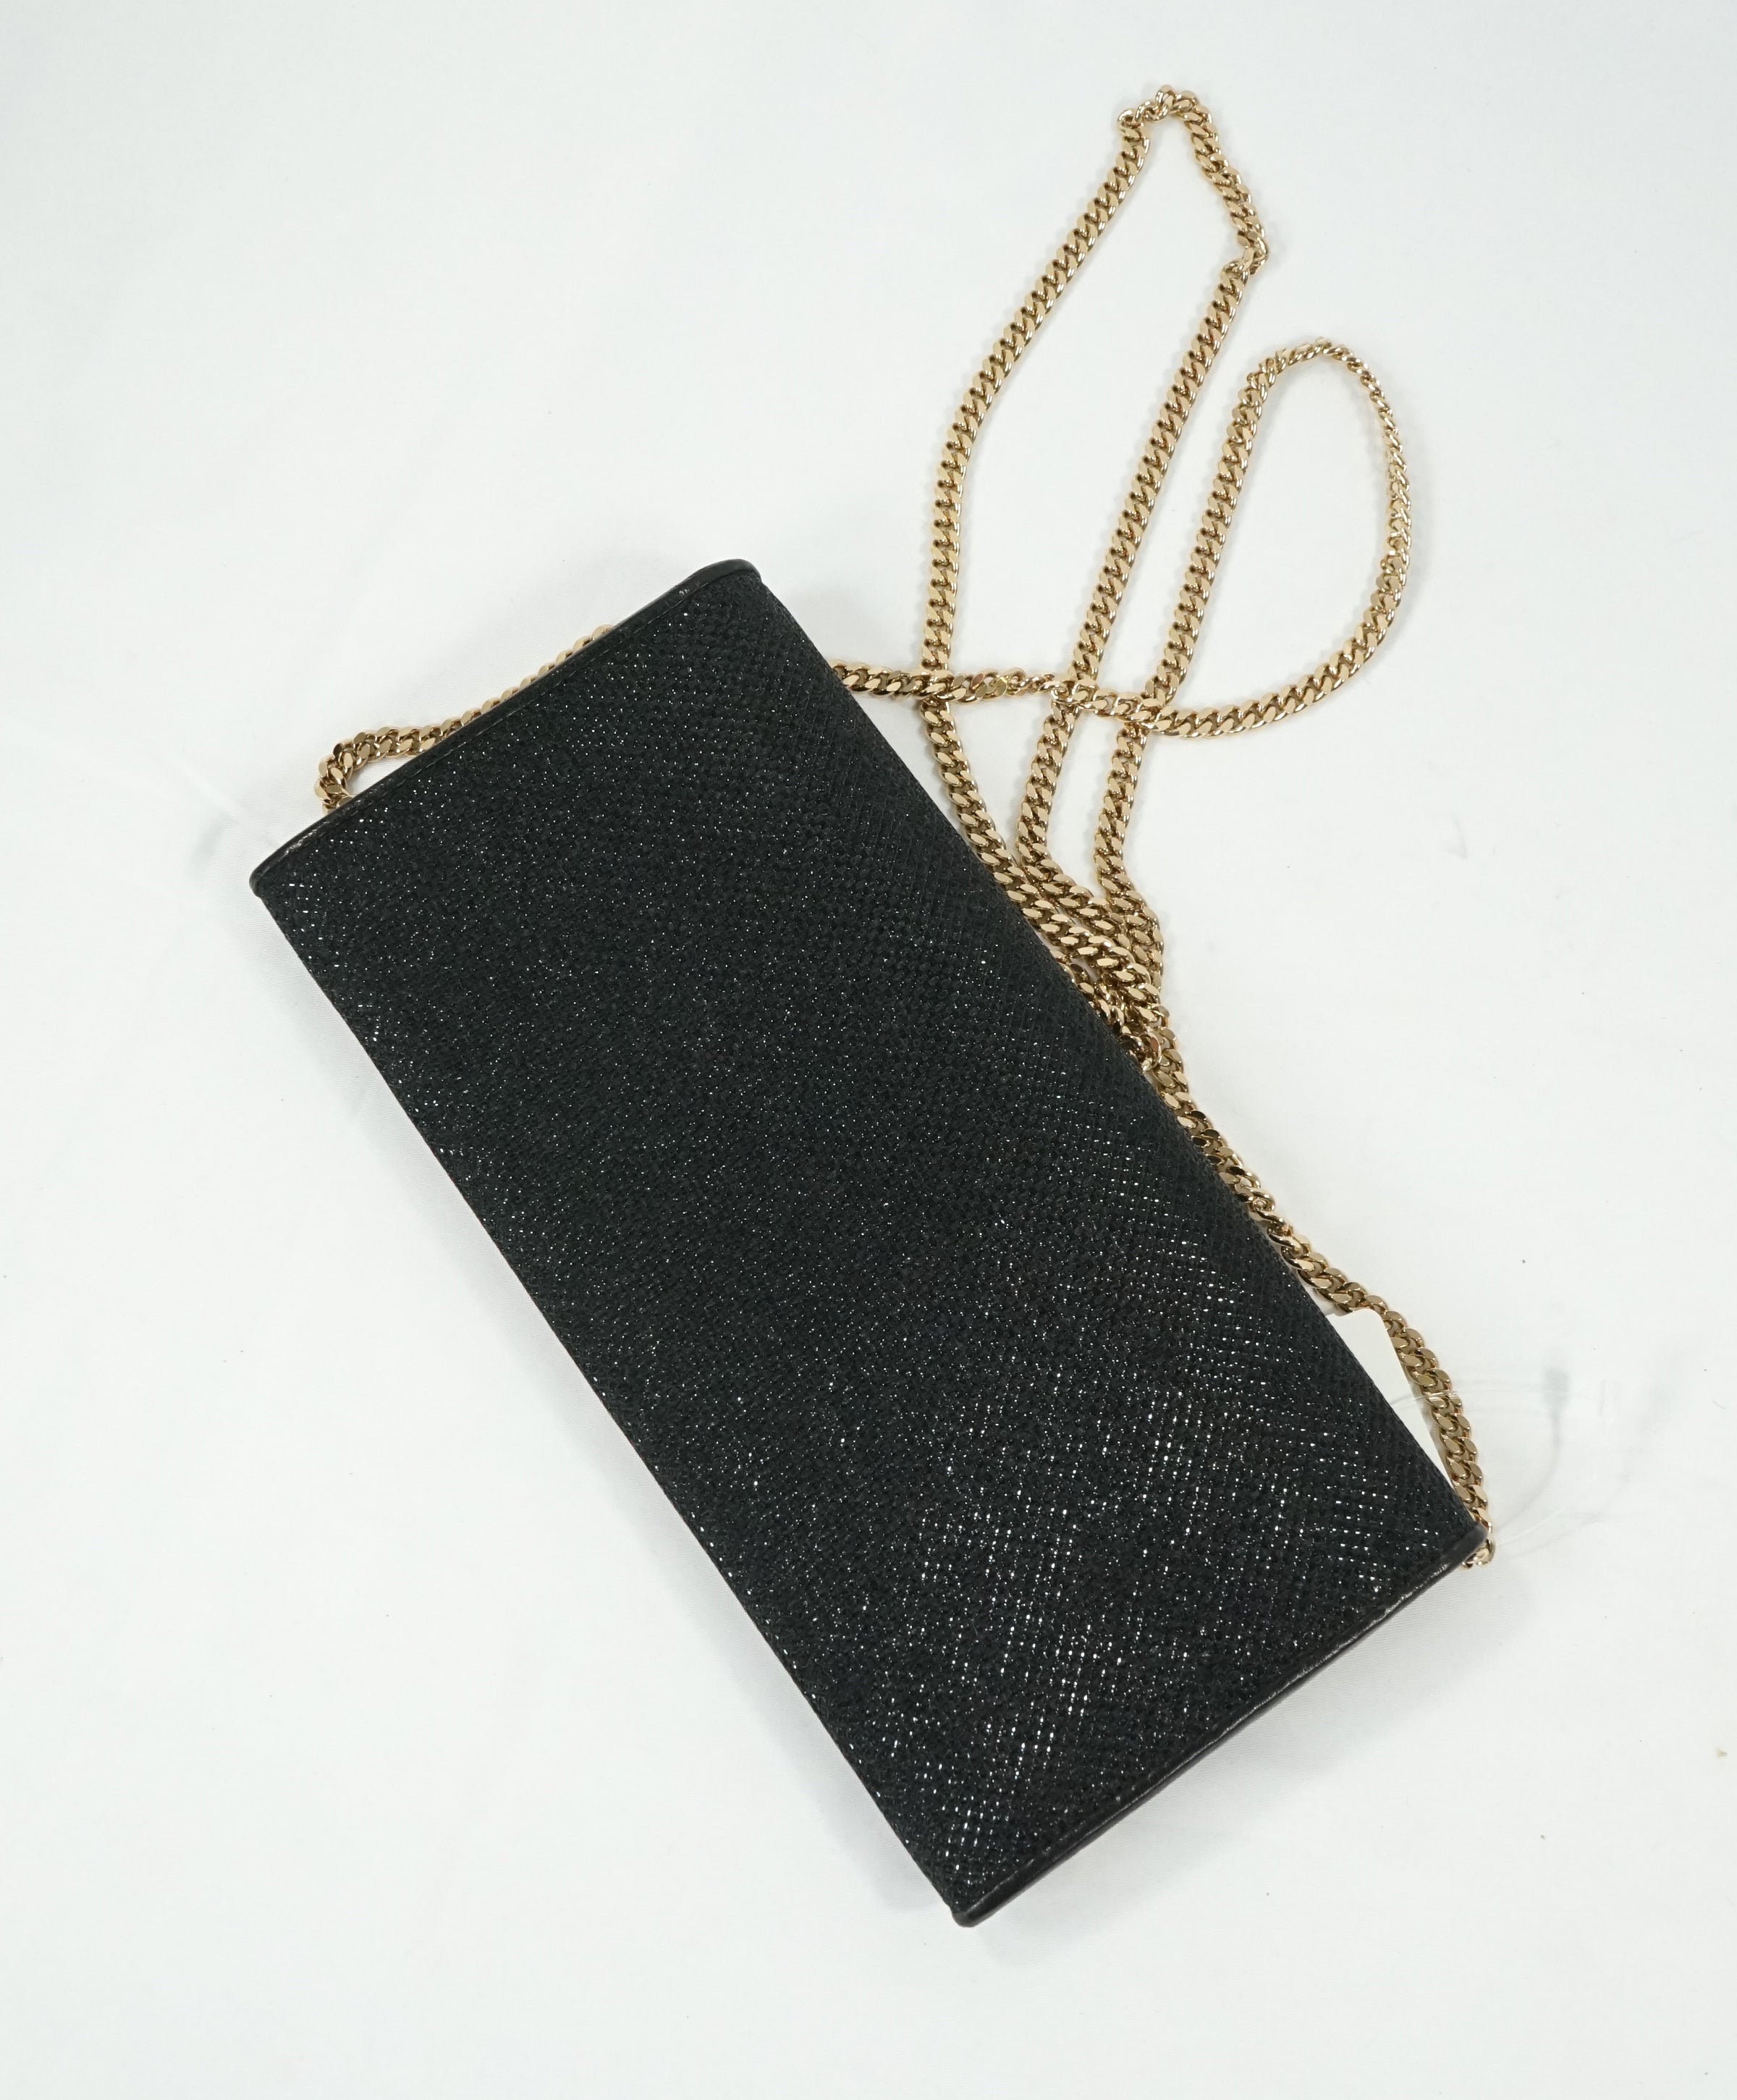 JIMMY CHOO - Black MILLA Lame Glitter Clutch Bag Gold Chain - – Luxe  Hanger